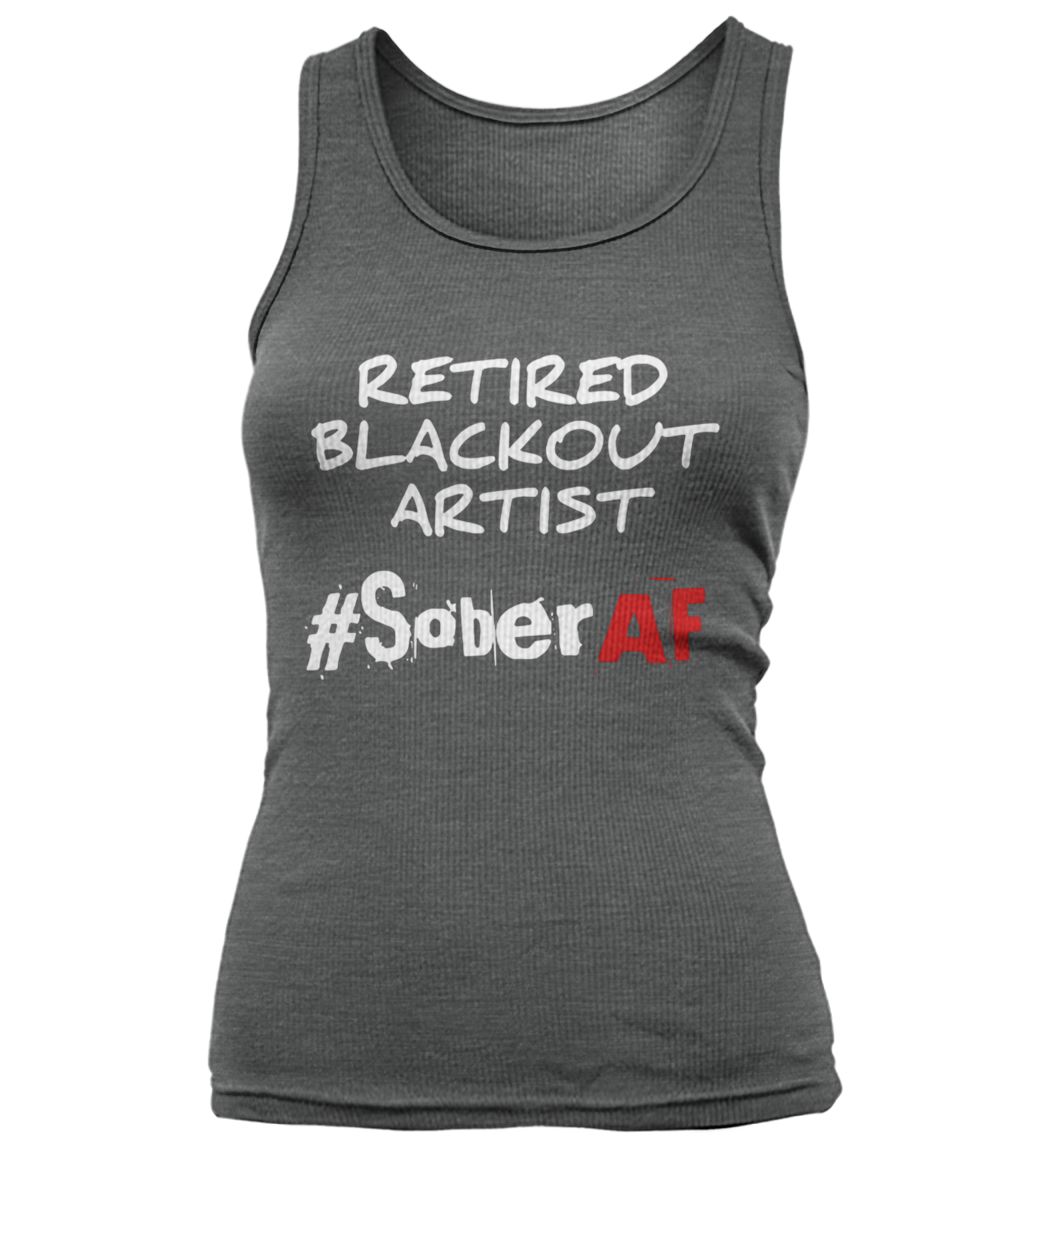 Retired blackout artist soberAF women's tank top